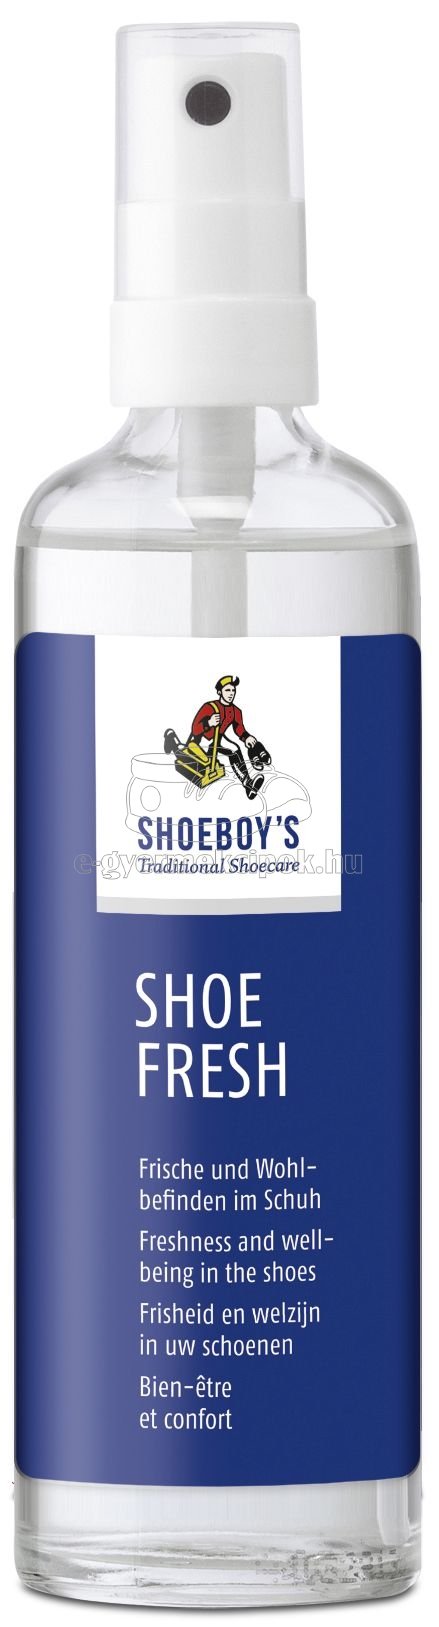 Shoeboy's SHOE FRESH 100 ml